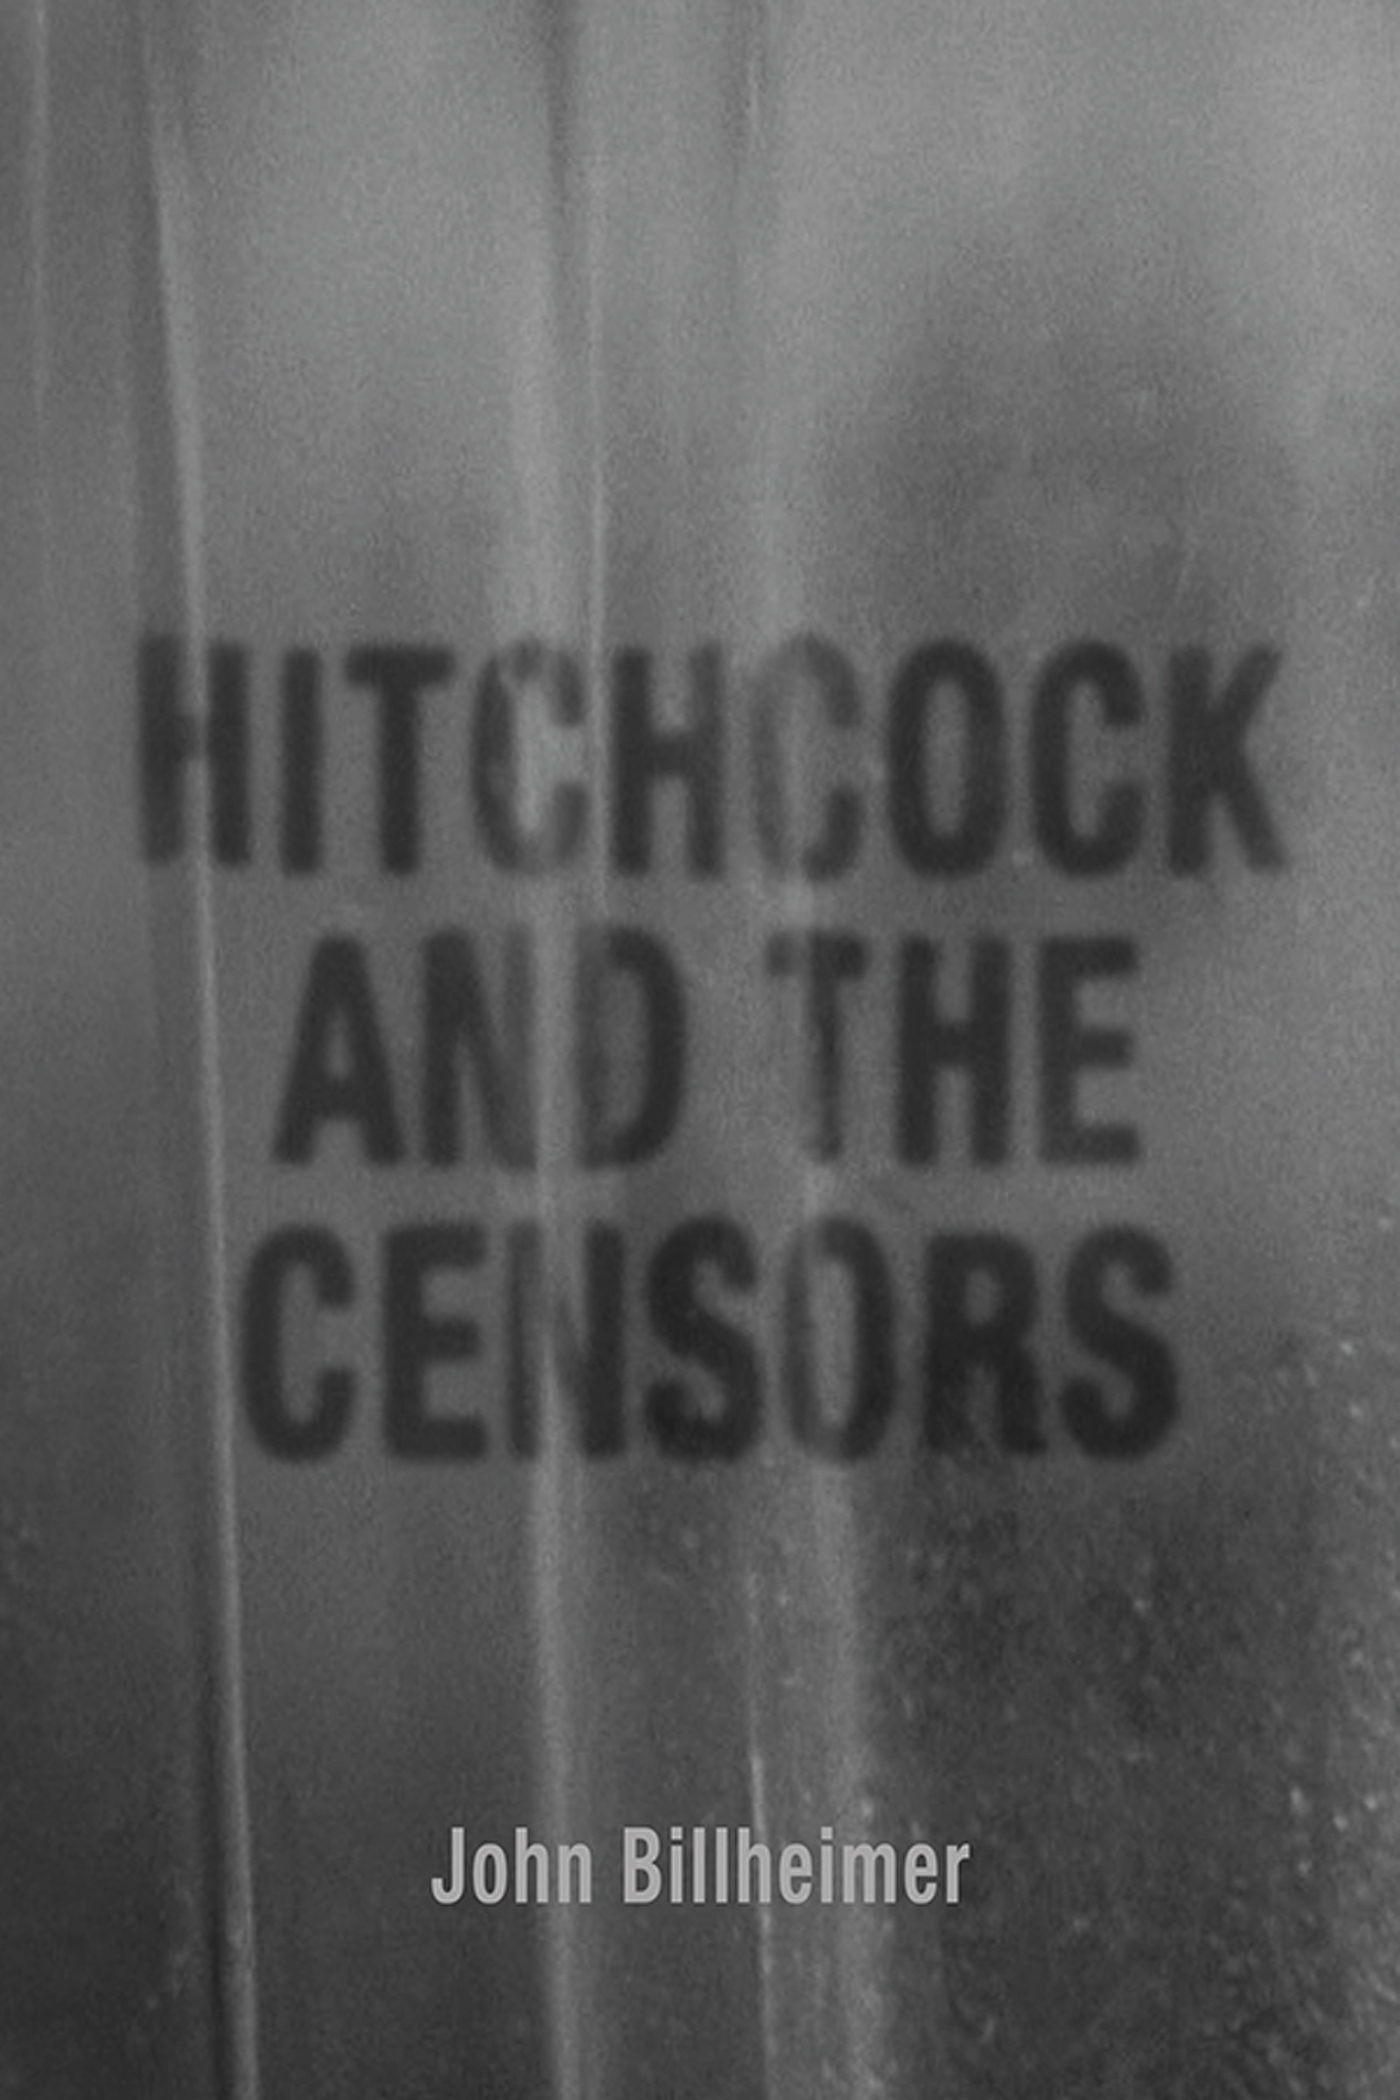 HITCHCOCK AND THE CENSORS HITCHCOCK AND THE CENSORS JOHN BILLHEIMER Due to - photo 1